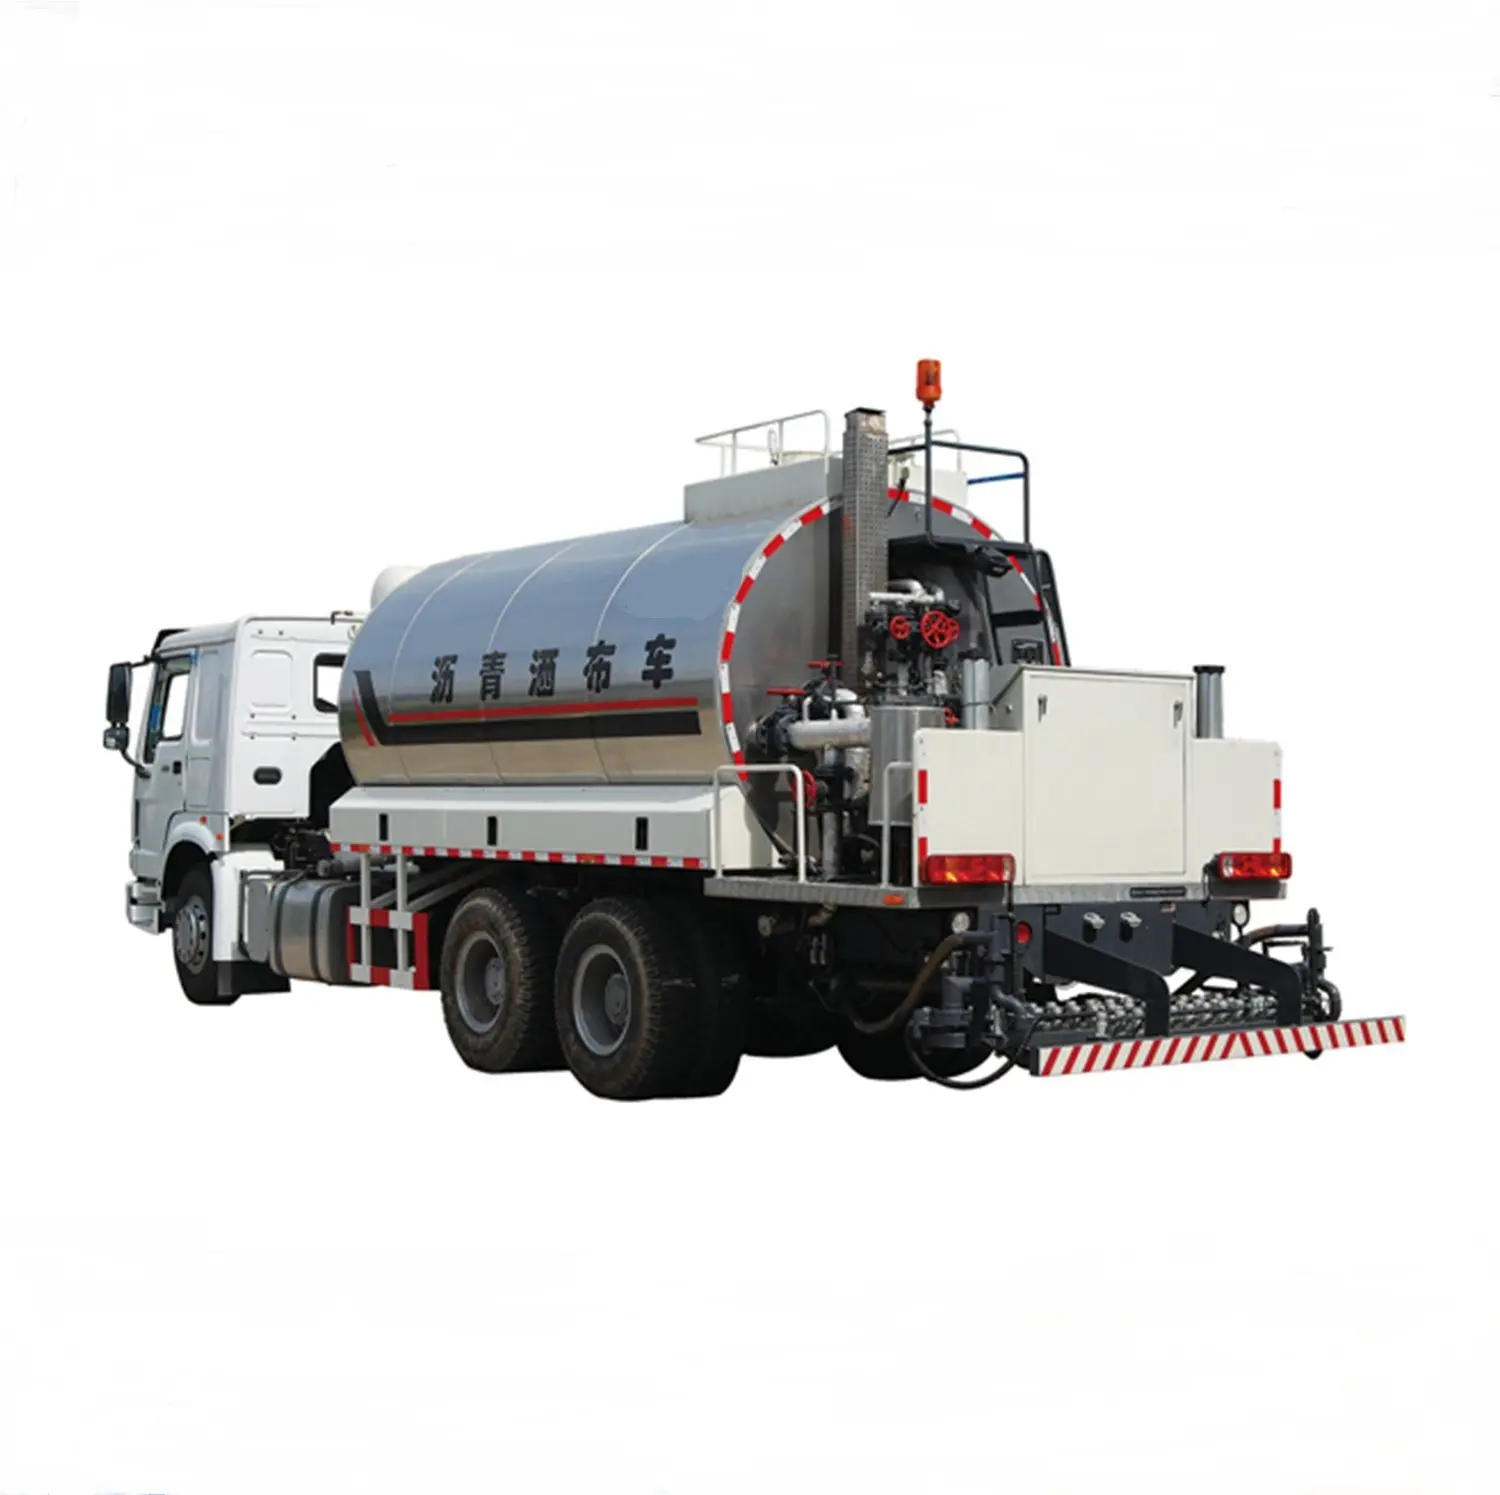 SINOTRUK HOWO 6x4 16m3 asphalt distributor truck 4.5m spraying width